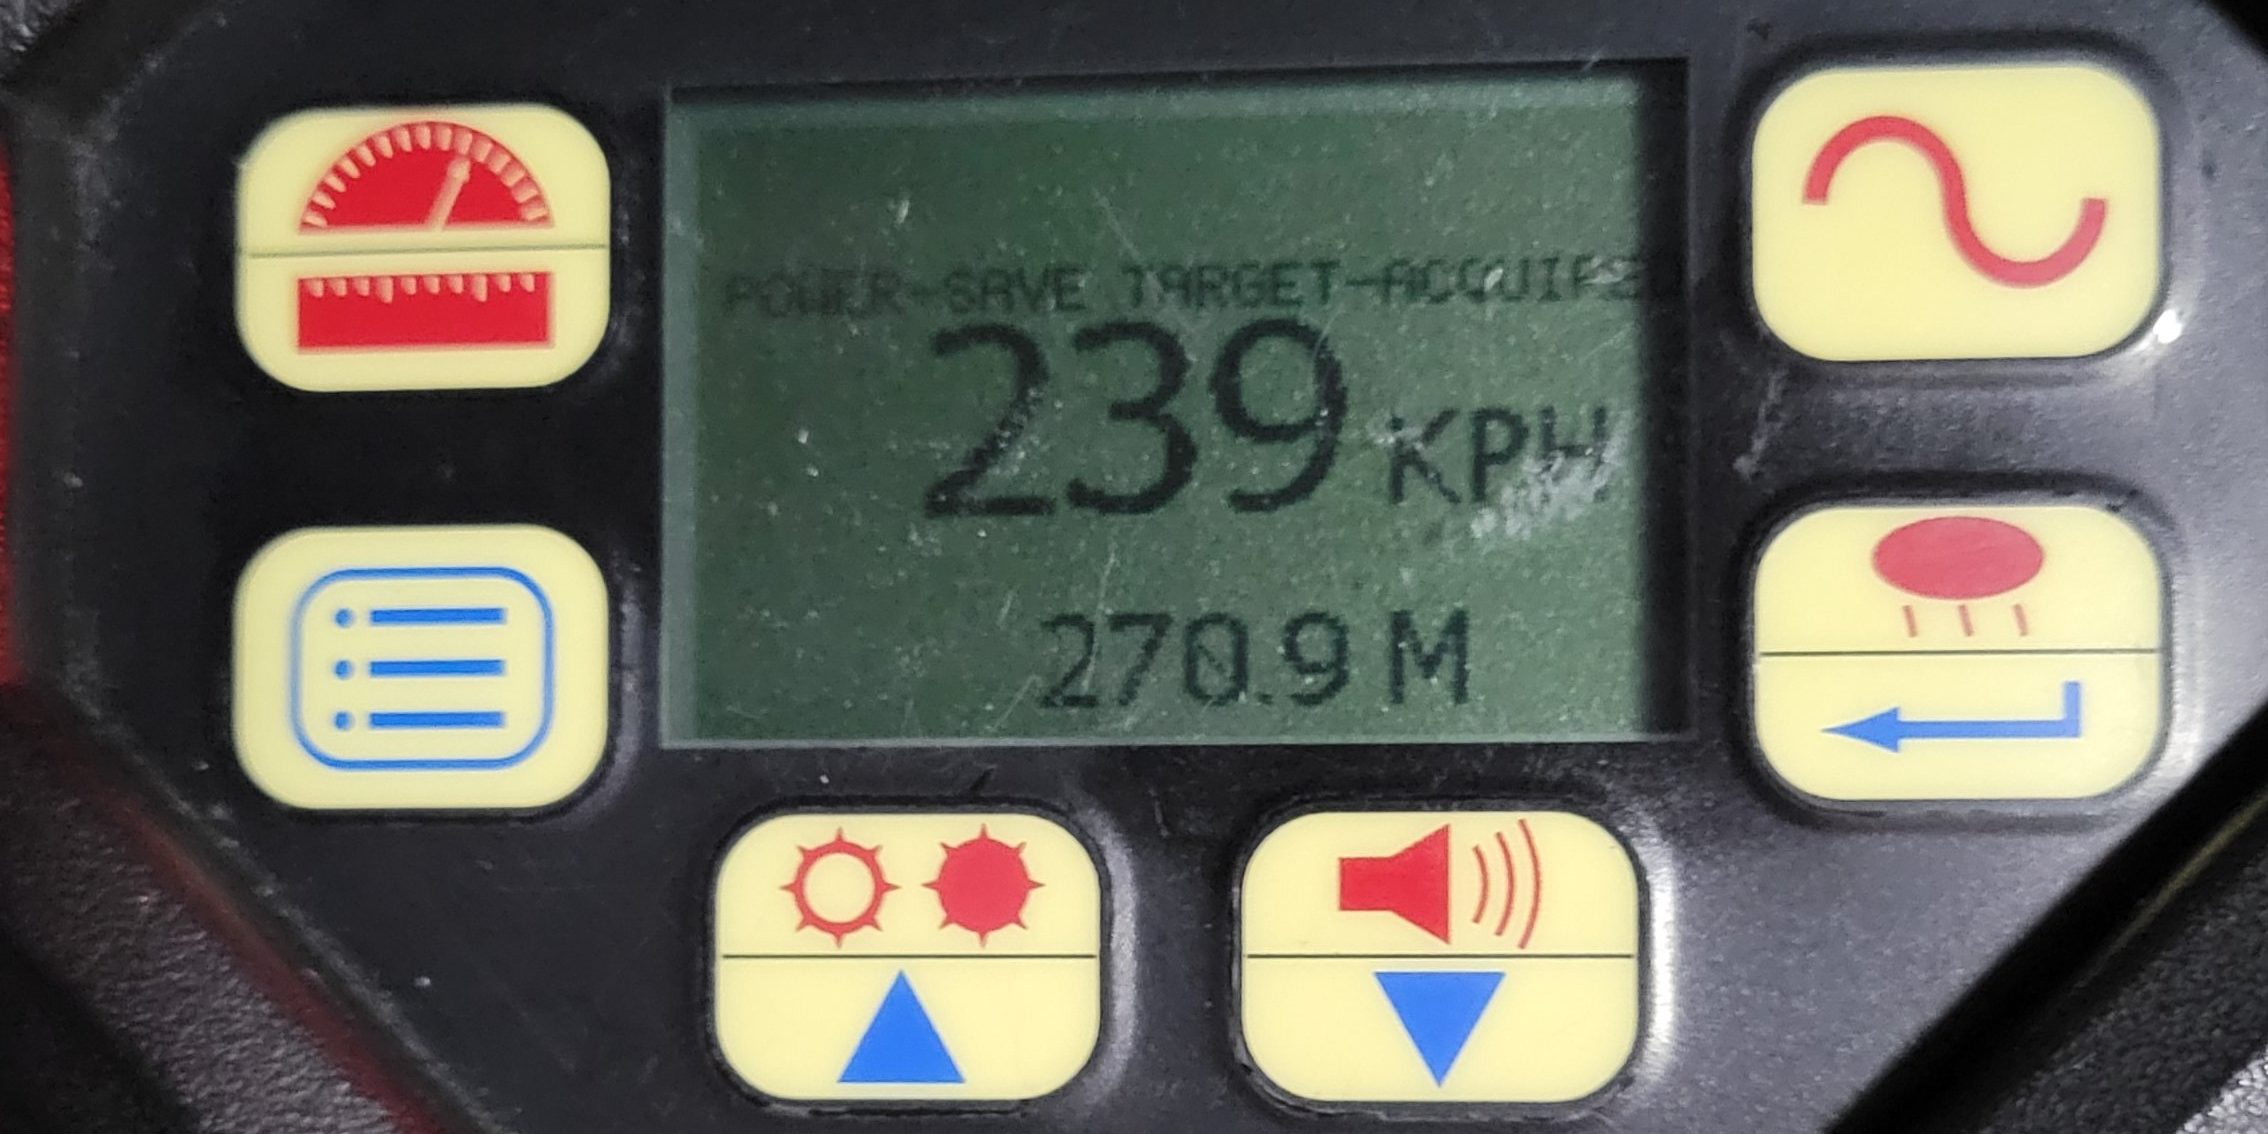 G2 driver clocked at 239 km/h on Hamilton QEW